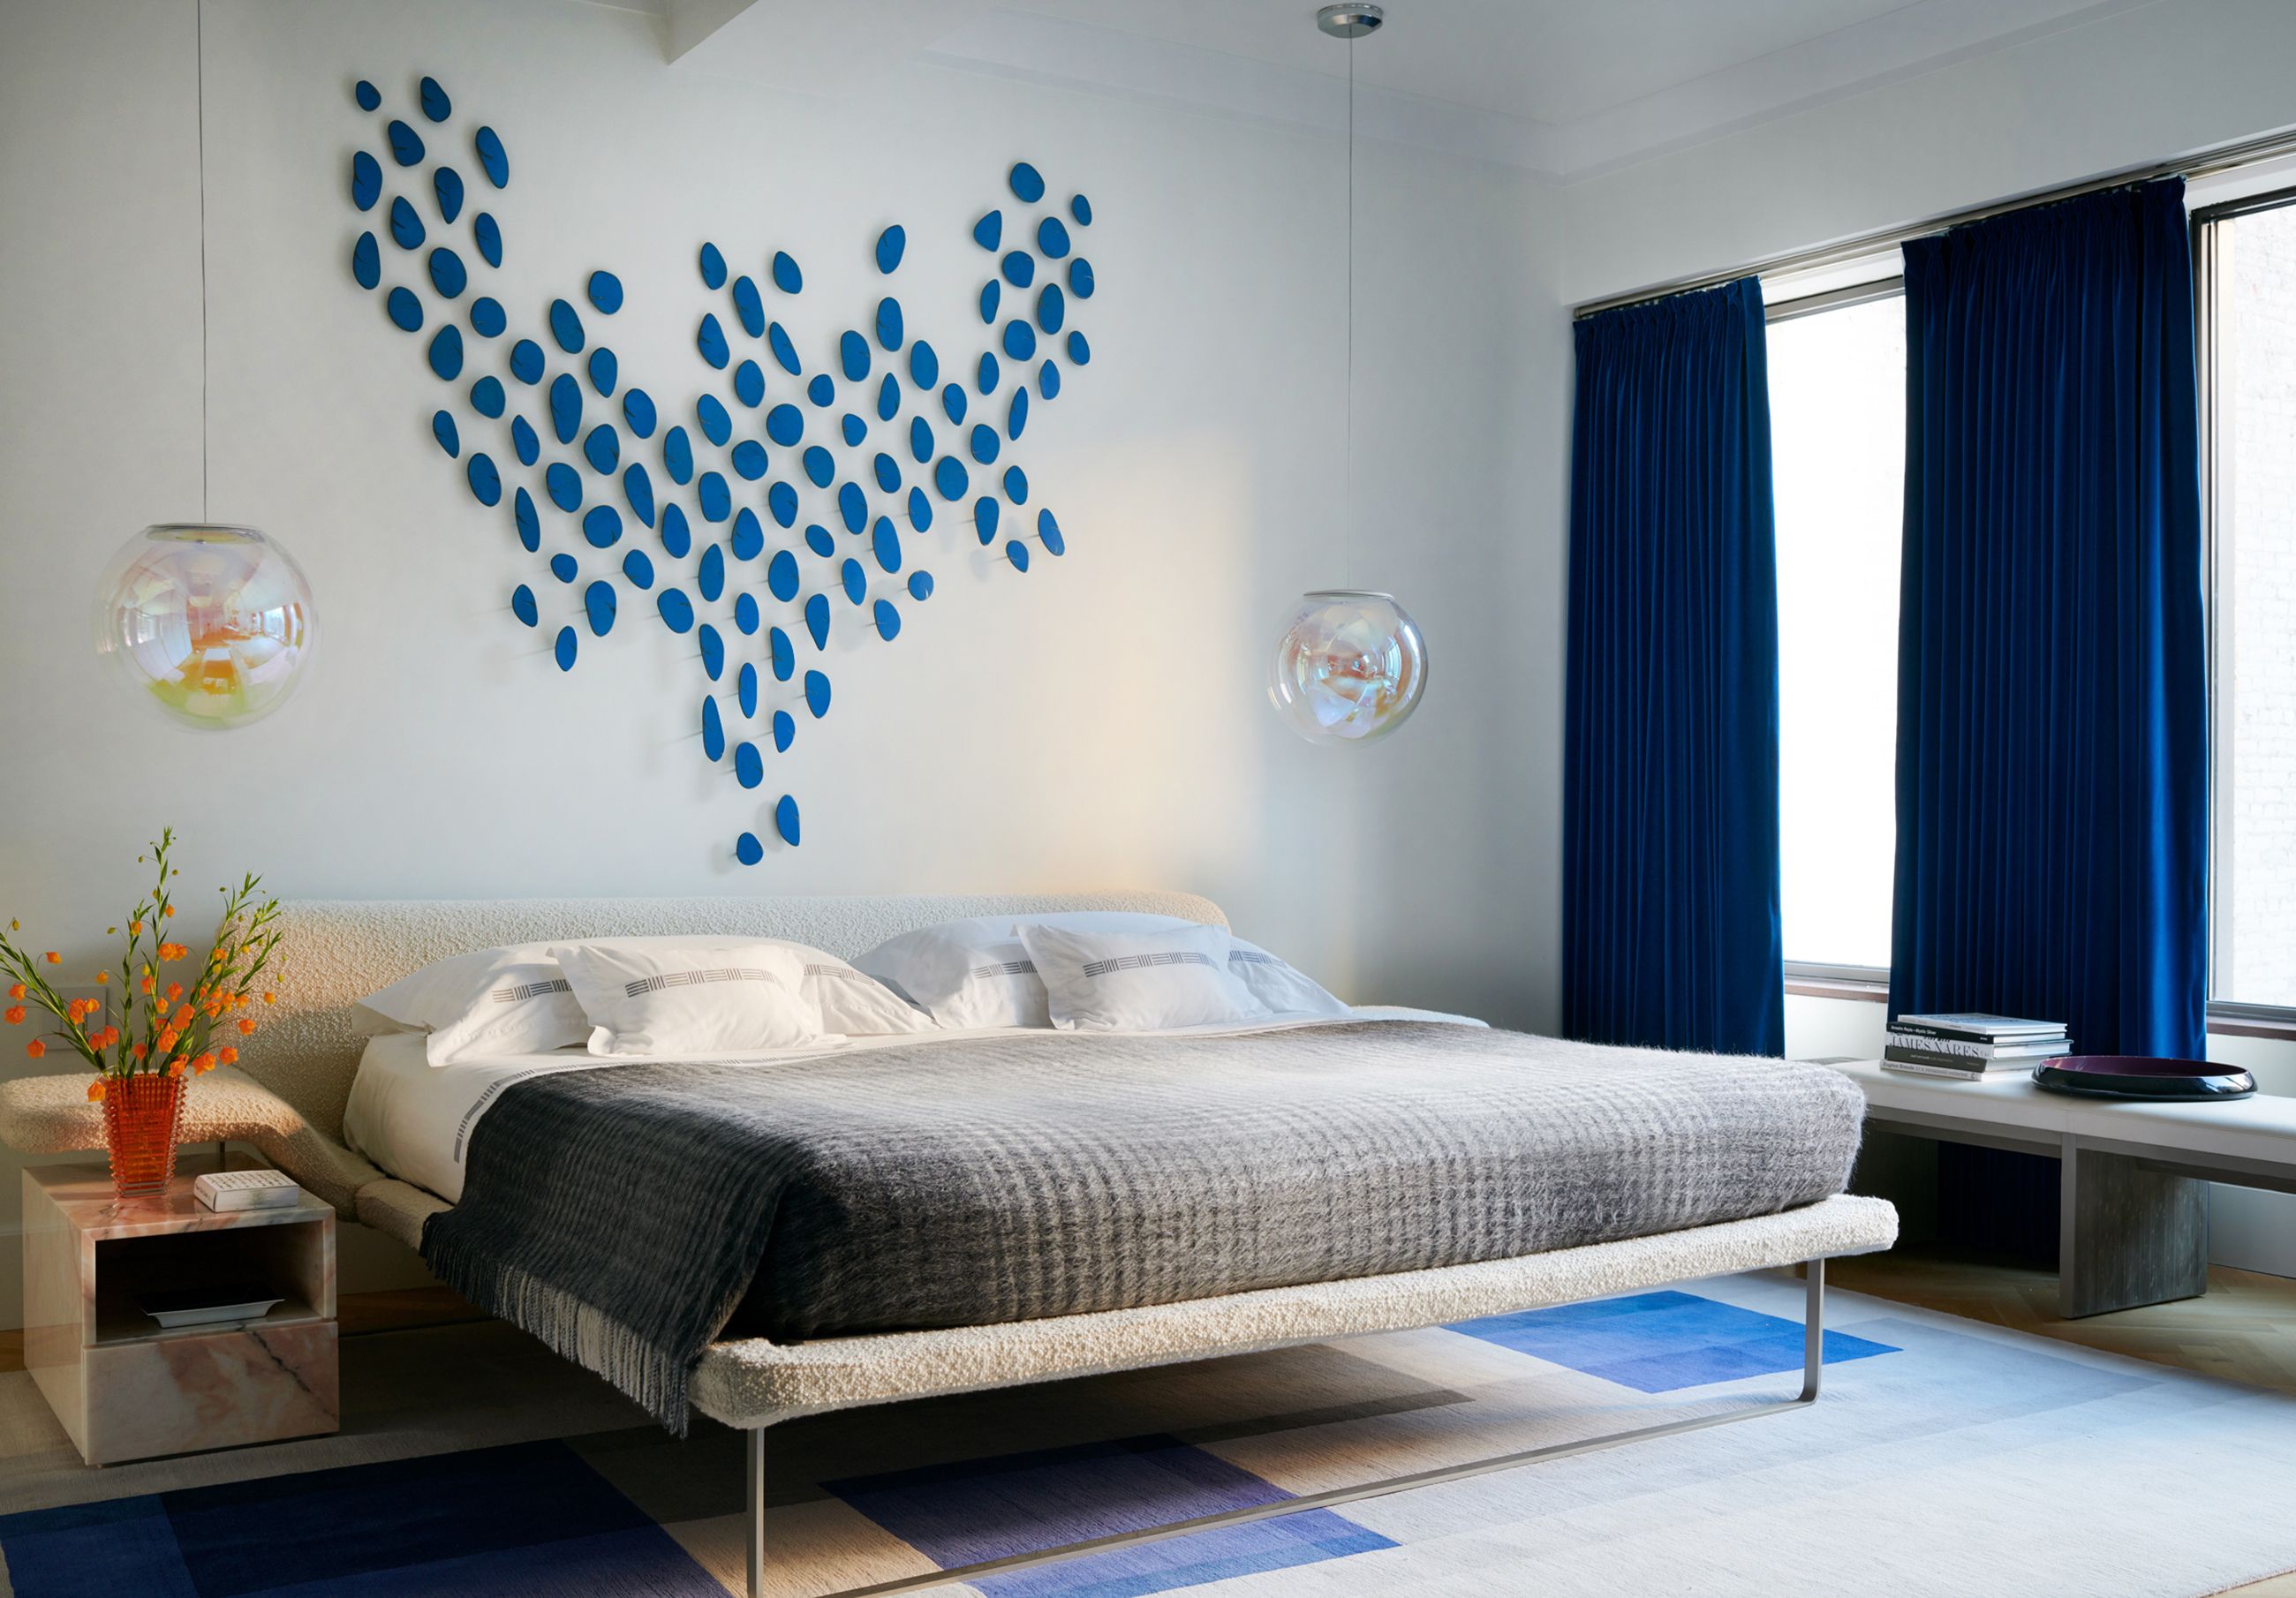 18 Inspiring Modern Bedroom Ideas - Best Modern Bedroom Designs